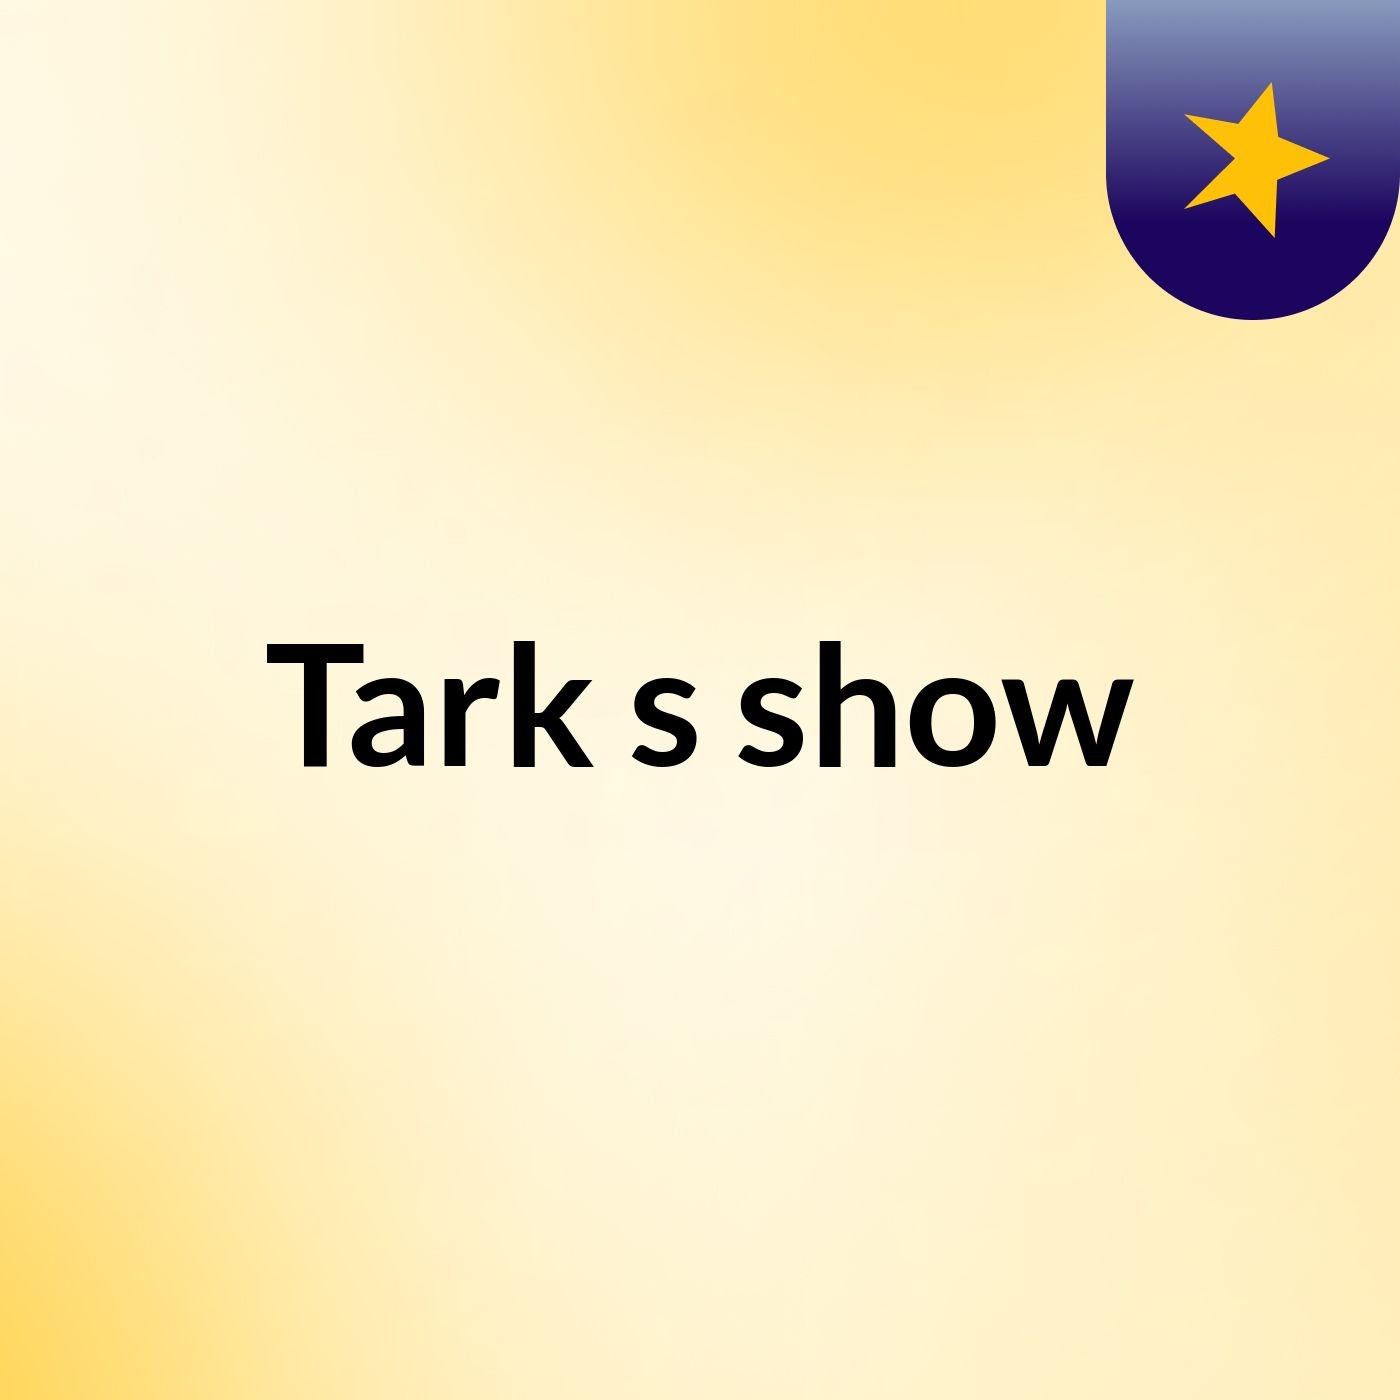 Tark's show